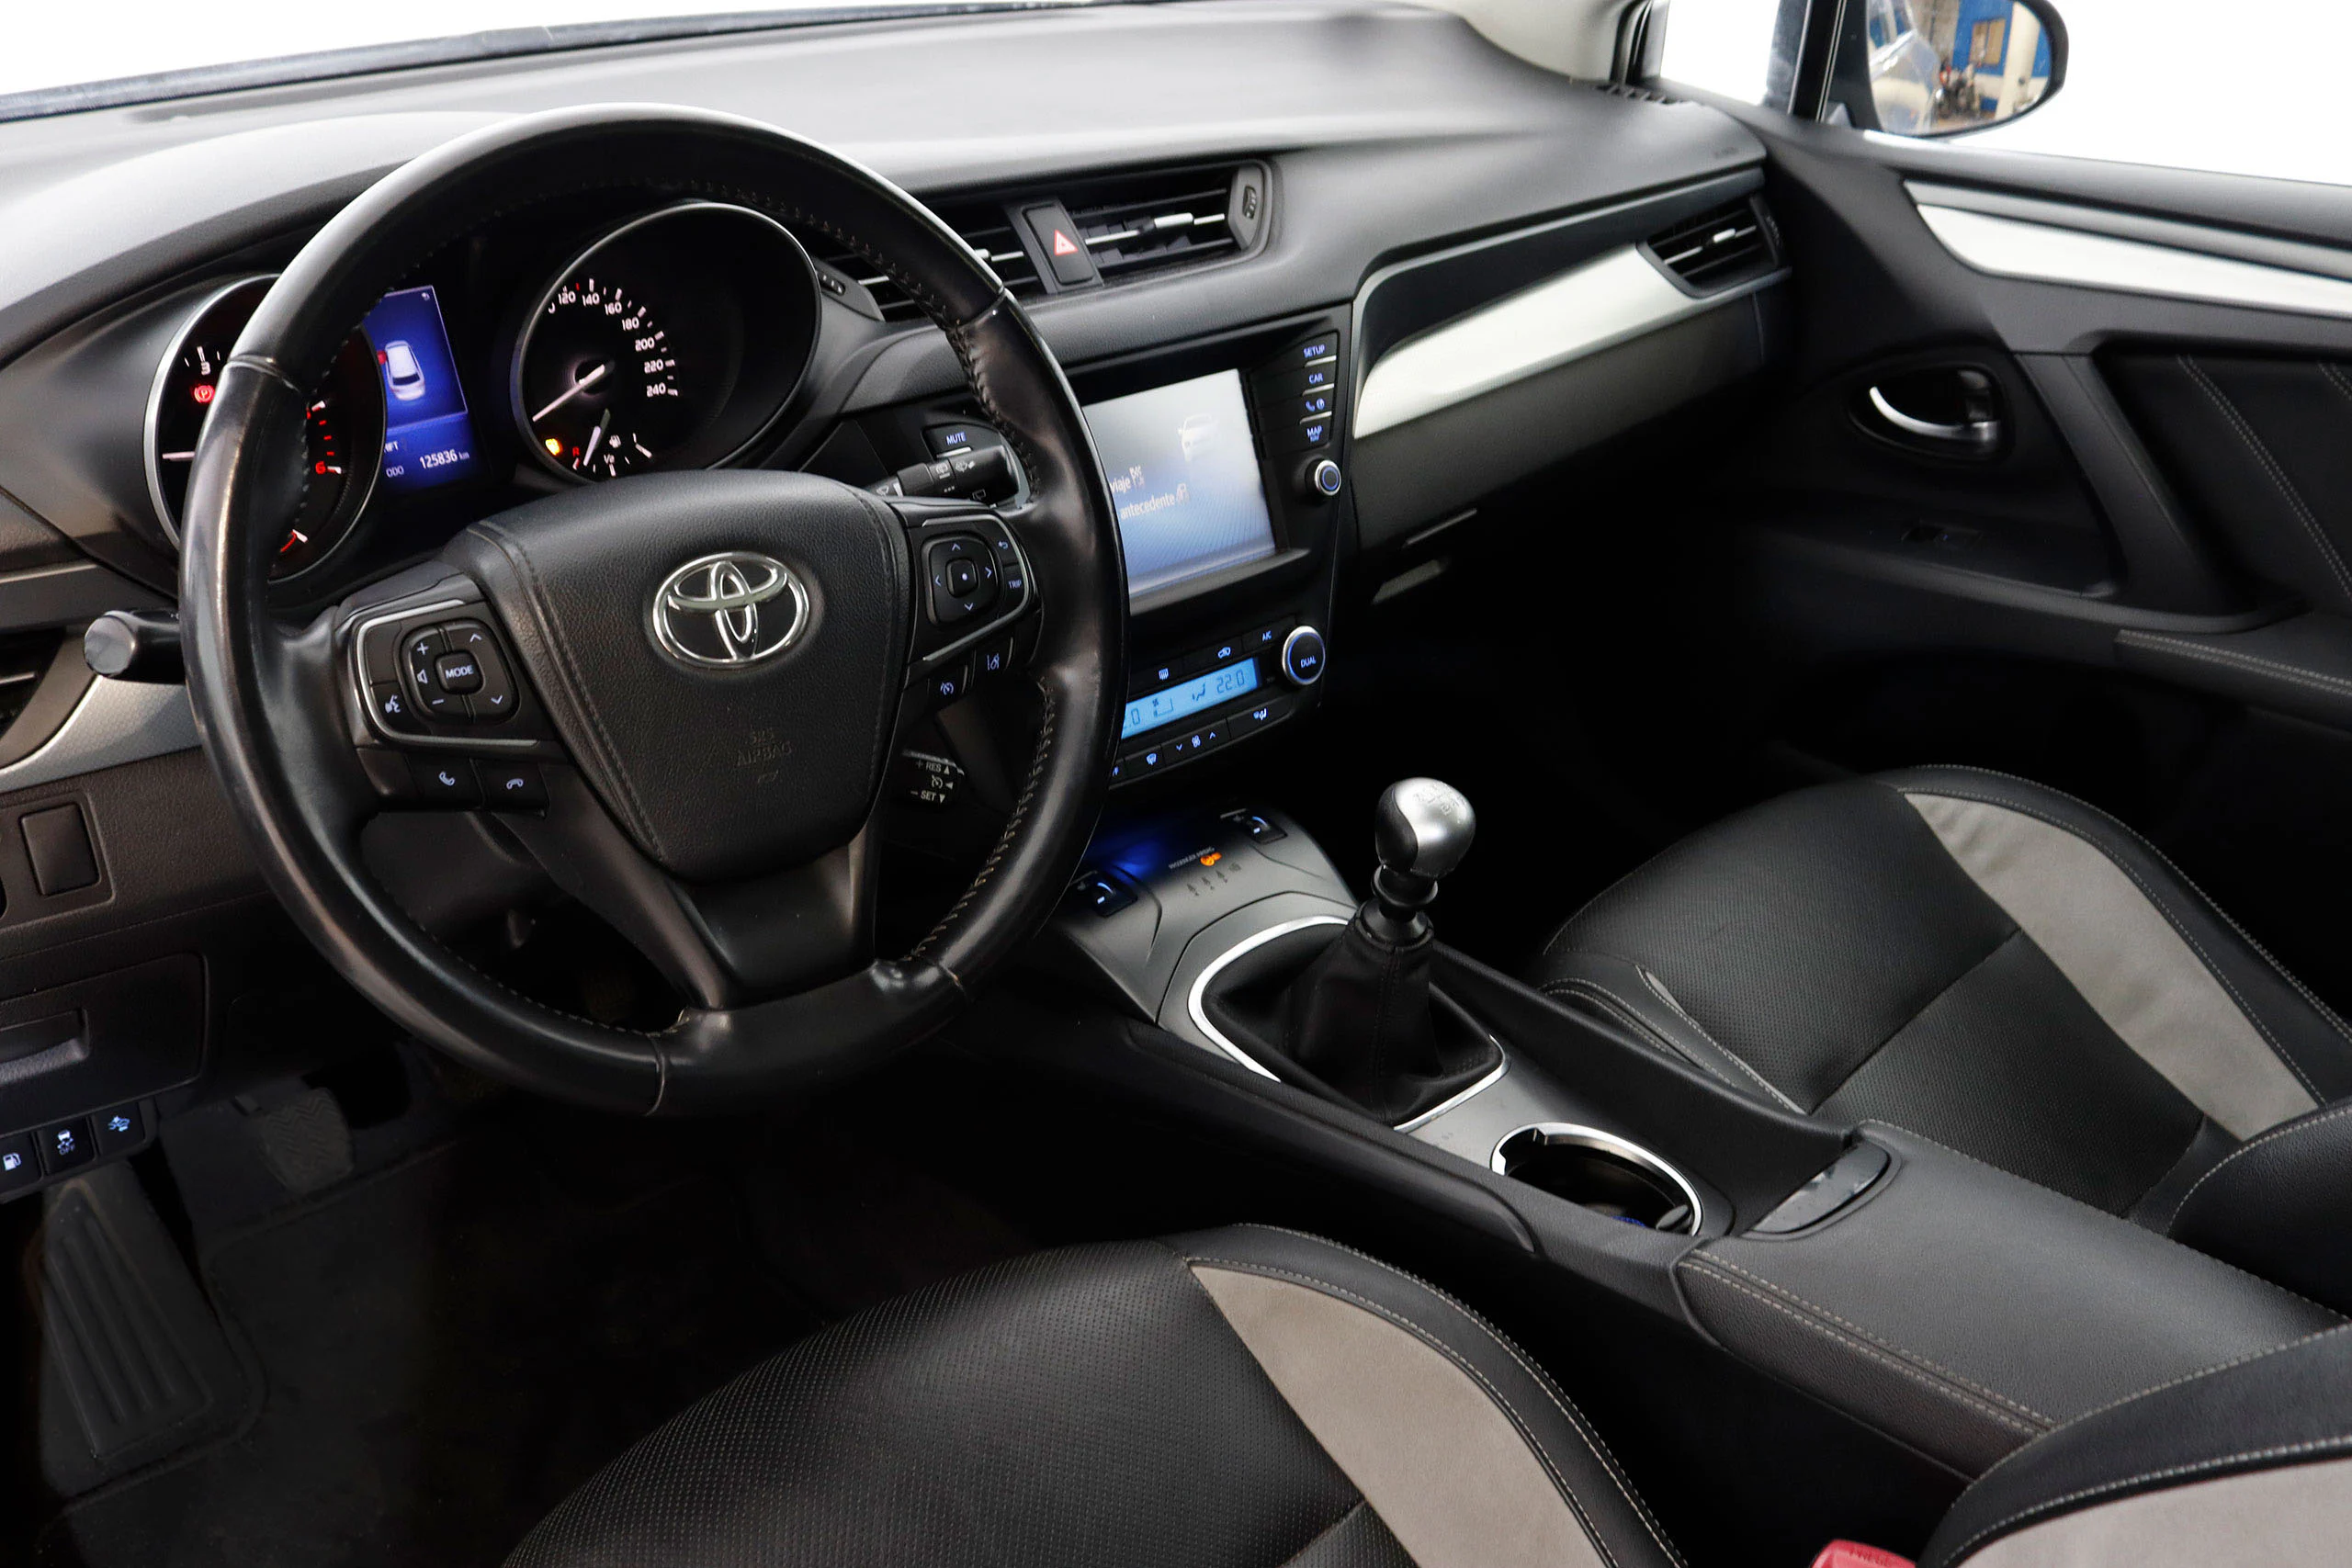 Toyota Avensis 2.0 TOURING SPORTS D4-D Dynamic 143cv 5P S/S # FAROS LED, TECHO PANORAMICO - Foto 18